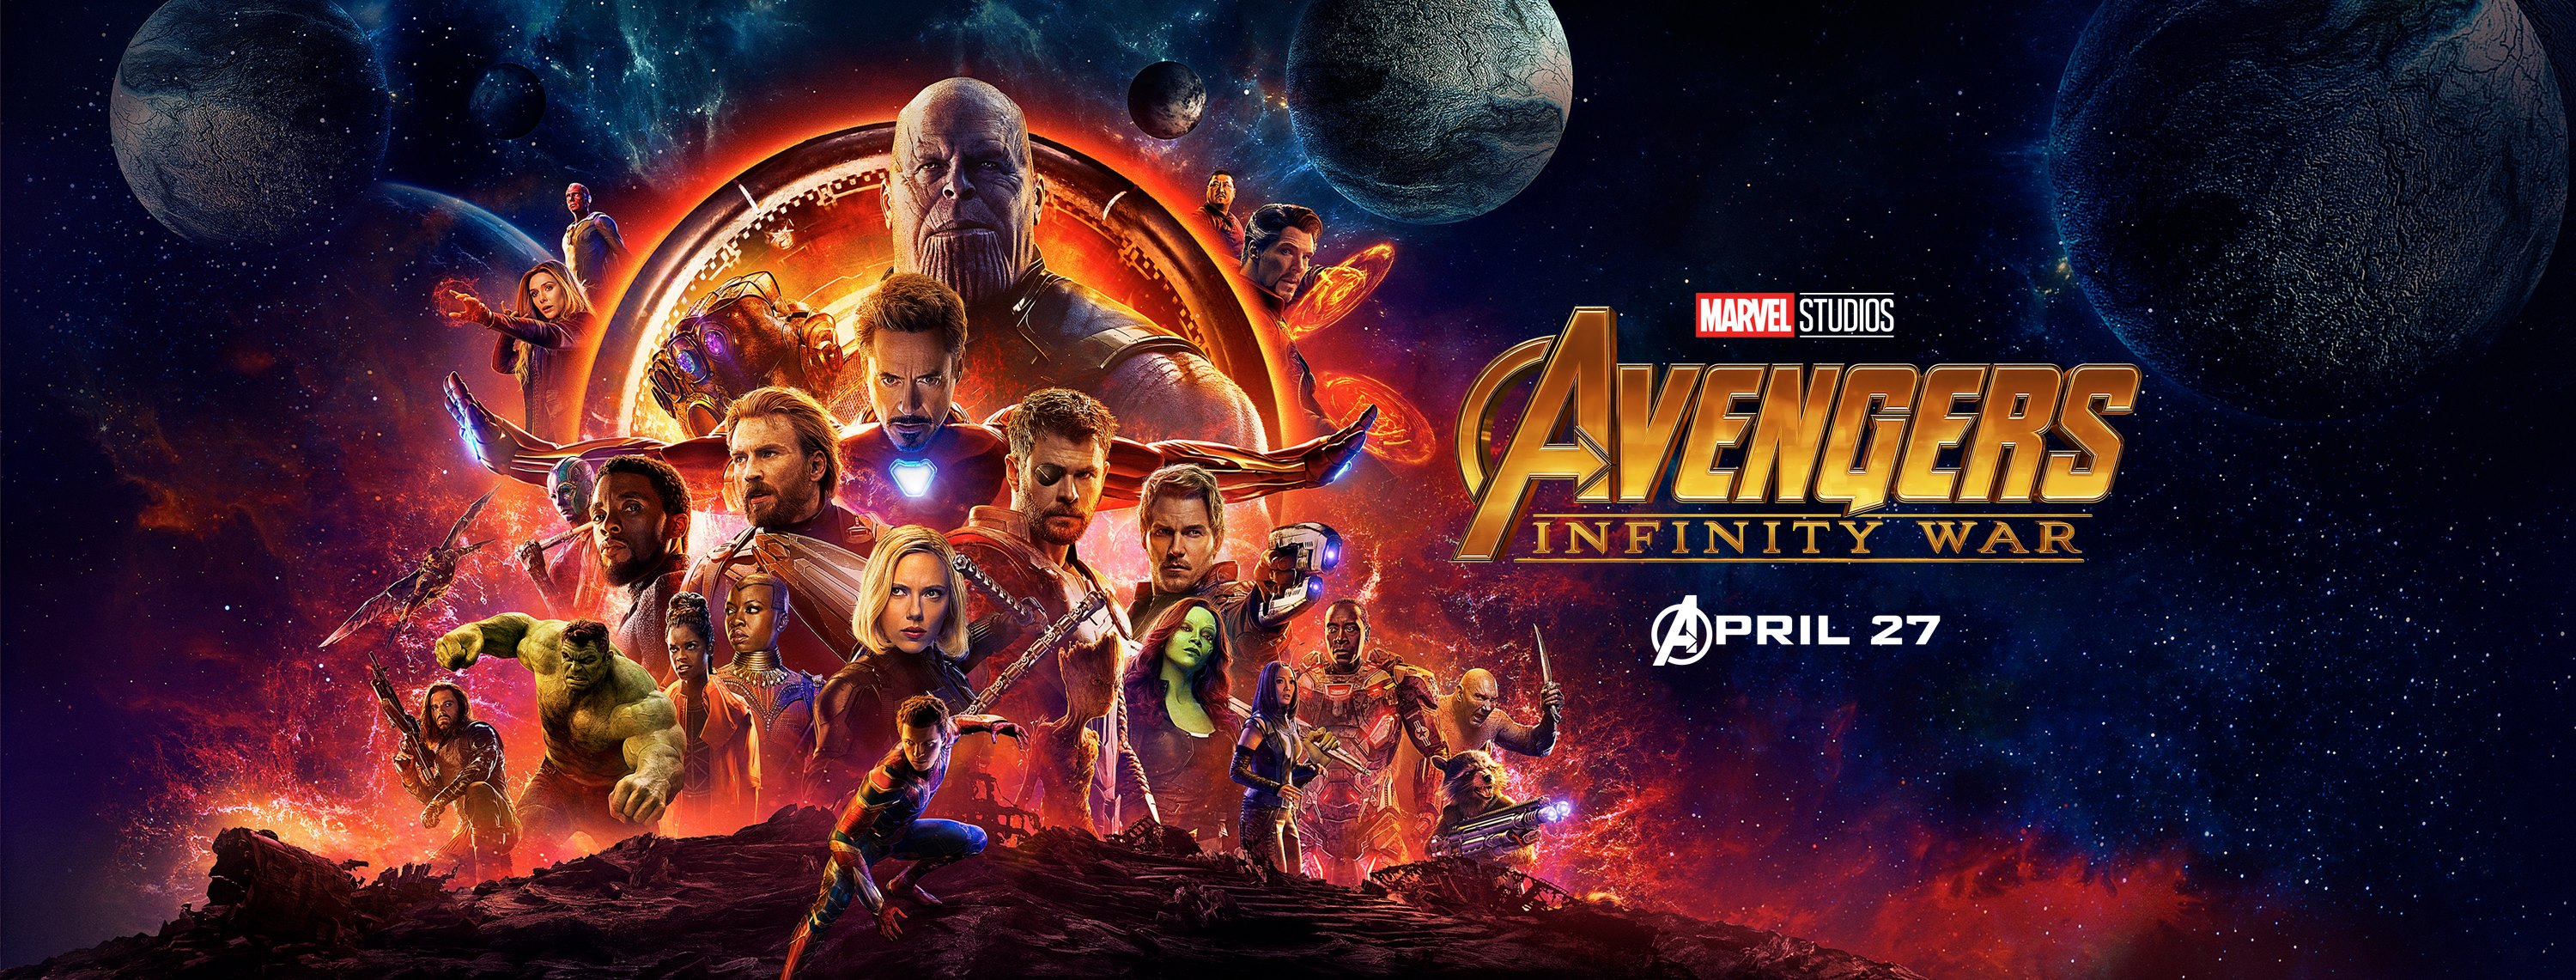 Avengers Infinity War pic